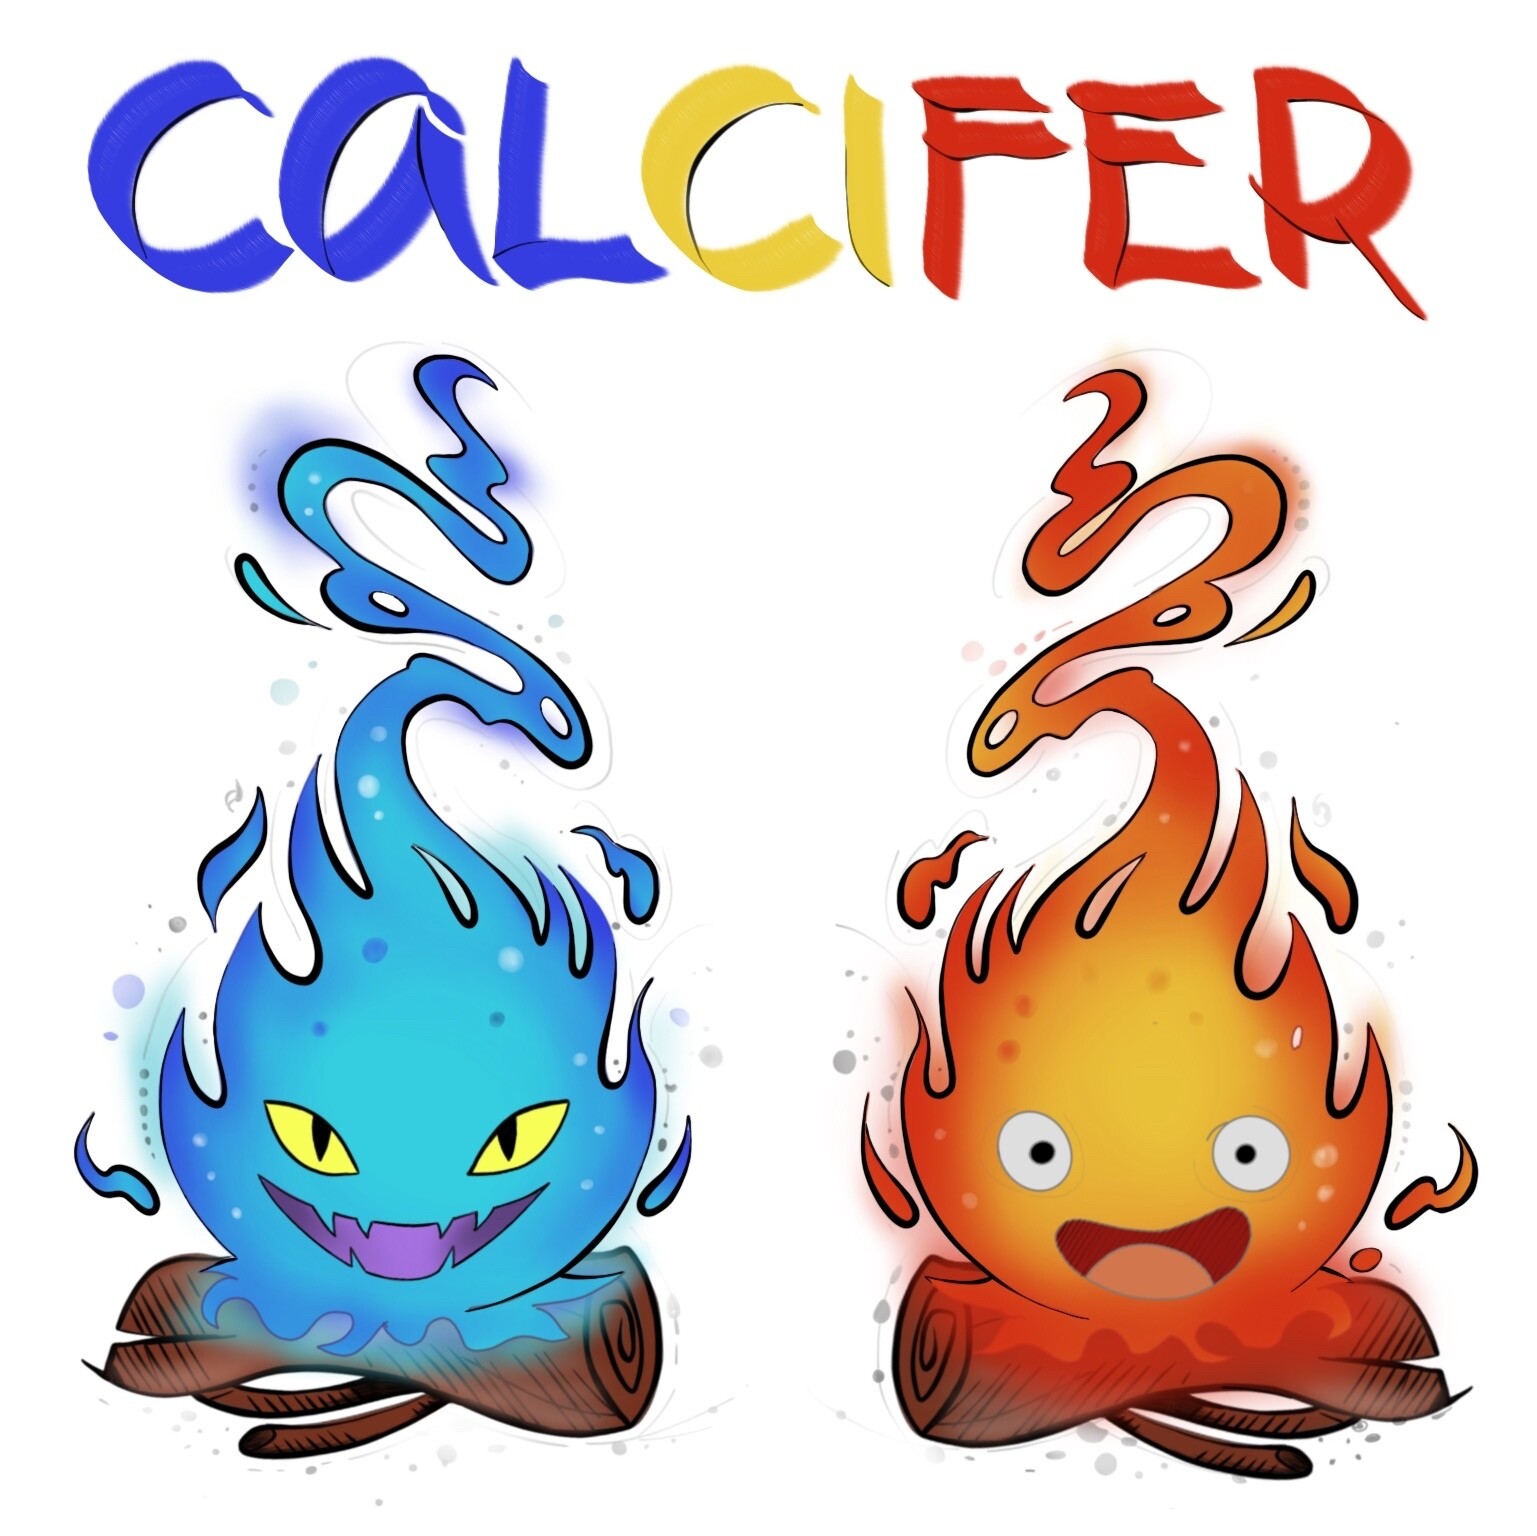 ArtStation - Calcifer is happy again